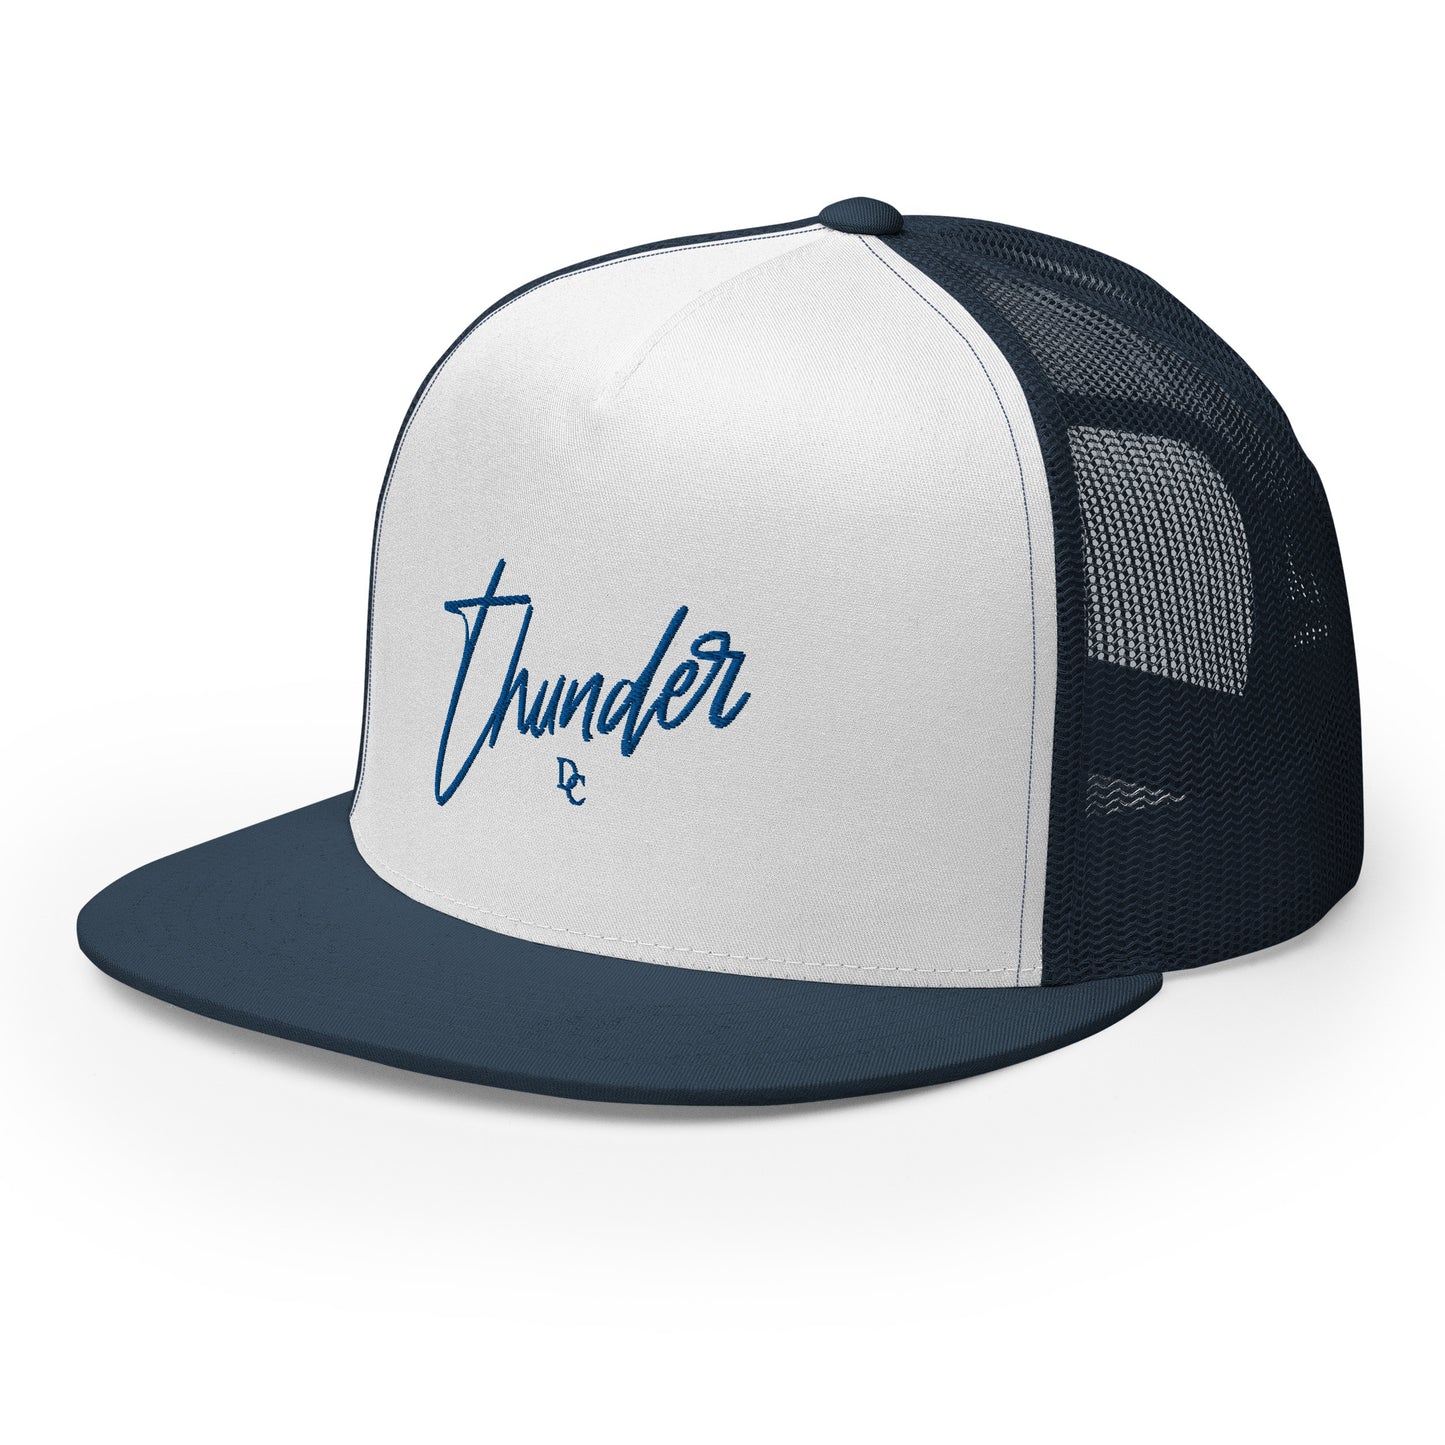 Thunder Script (Embroided) - Trucker Cap